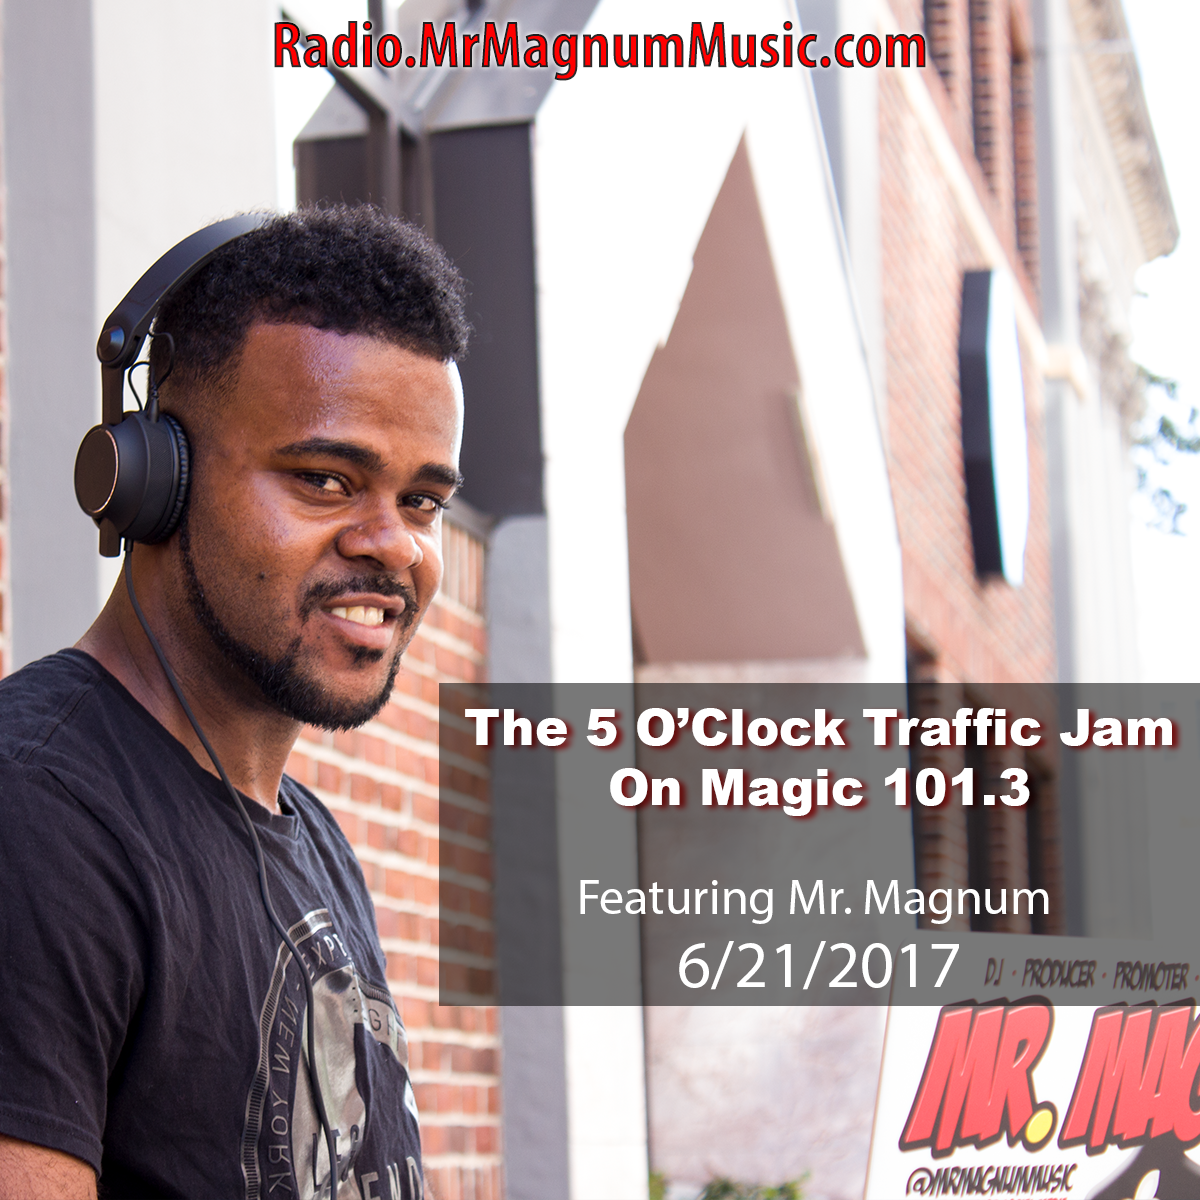 The 5 O'Clock Traffic Jam 20170621 featuring Gainesville's #1 DJ, Mr. Magnum on Magic 101.3